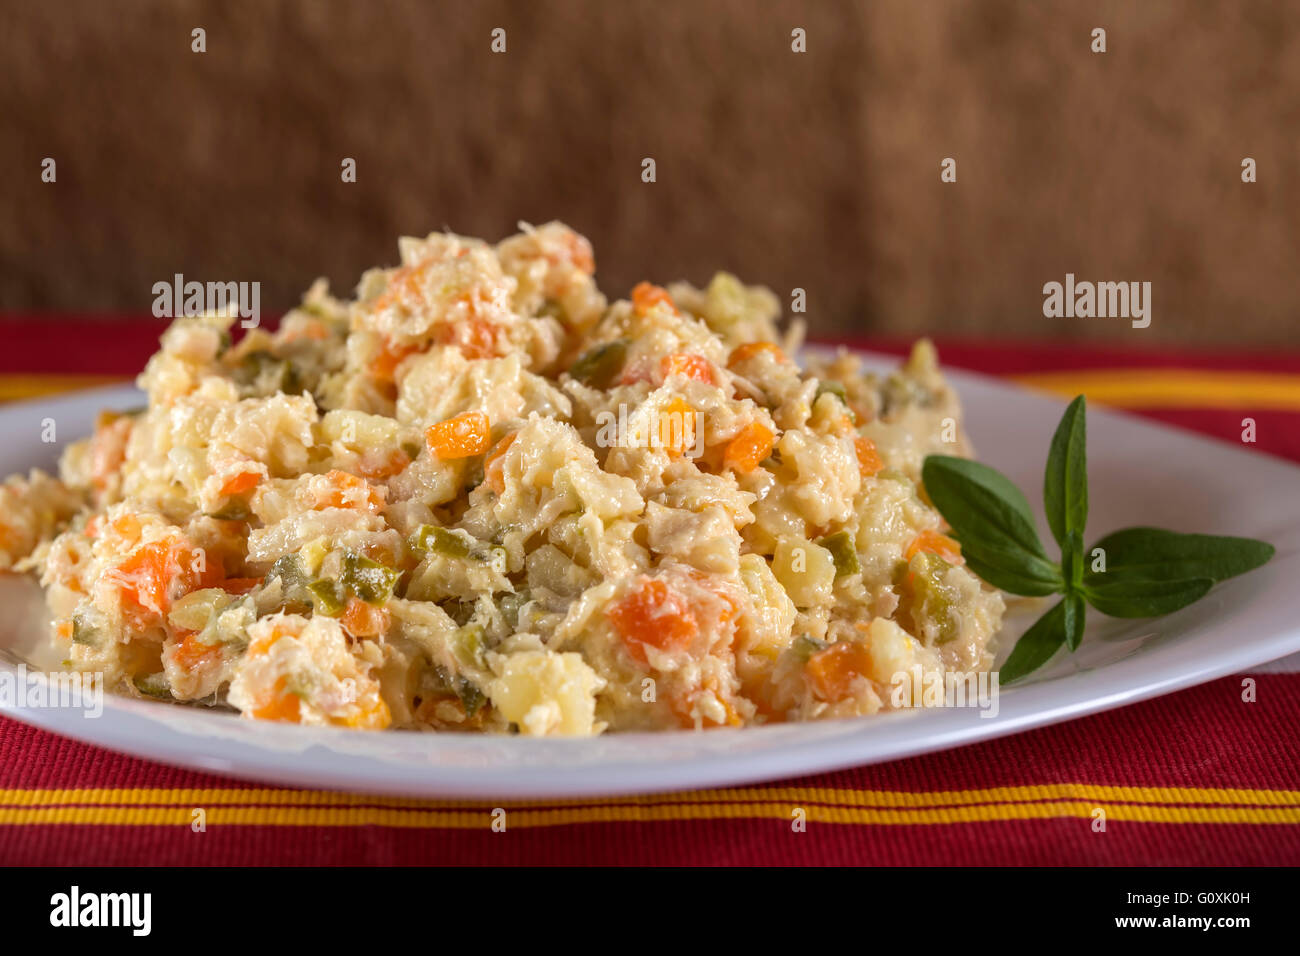 Romanian traditional Boeuf Salad on plate Stock Photo